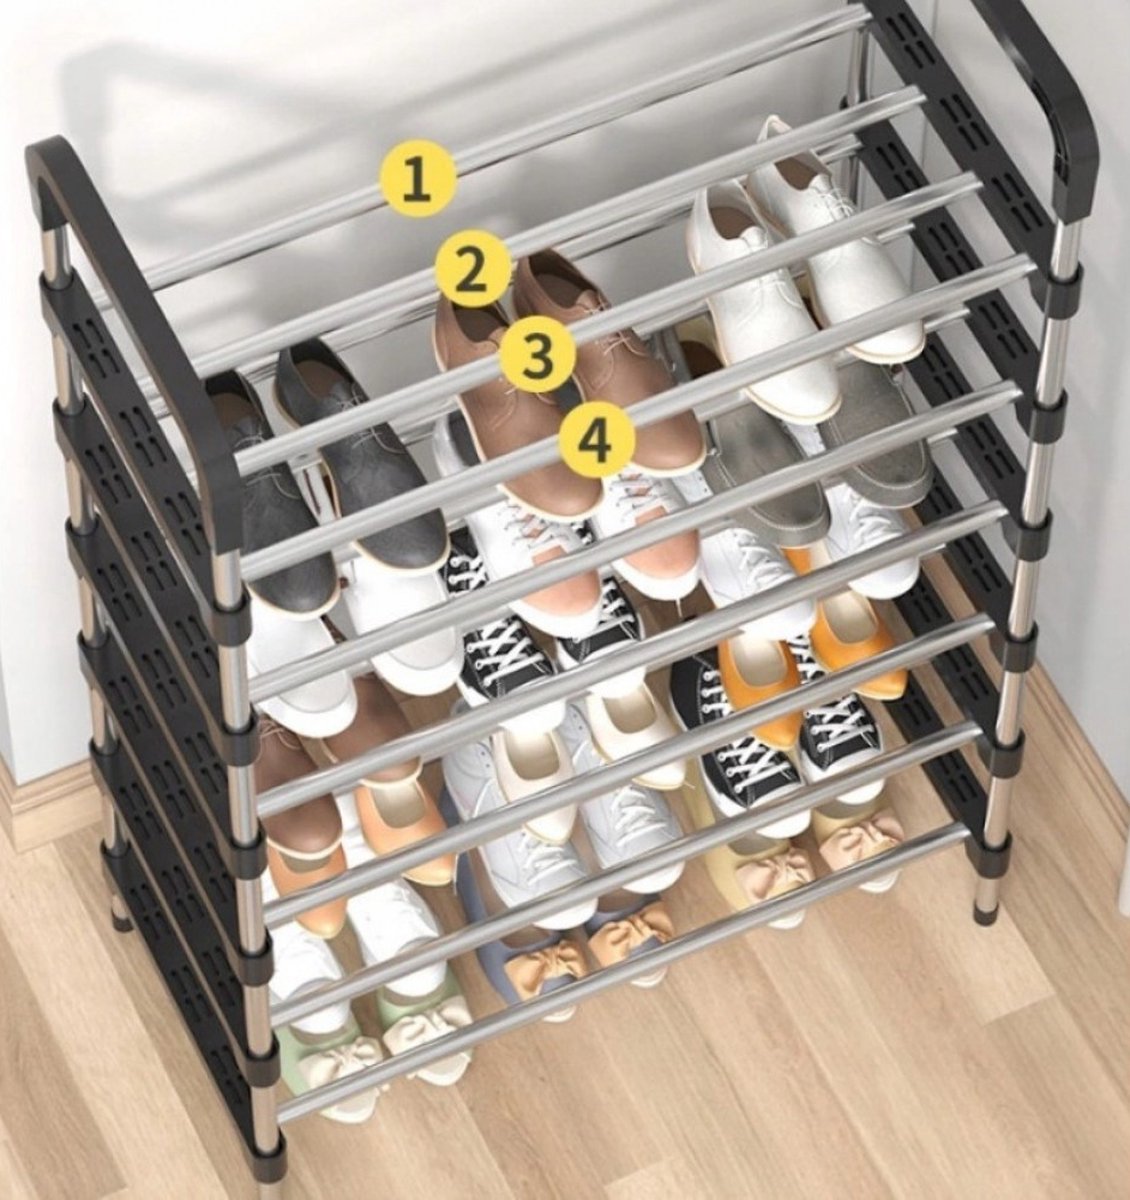 Eleganca Shoe rack with 4 levels